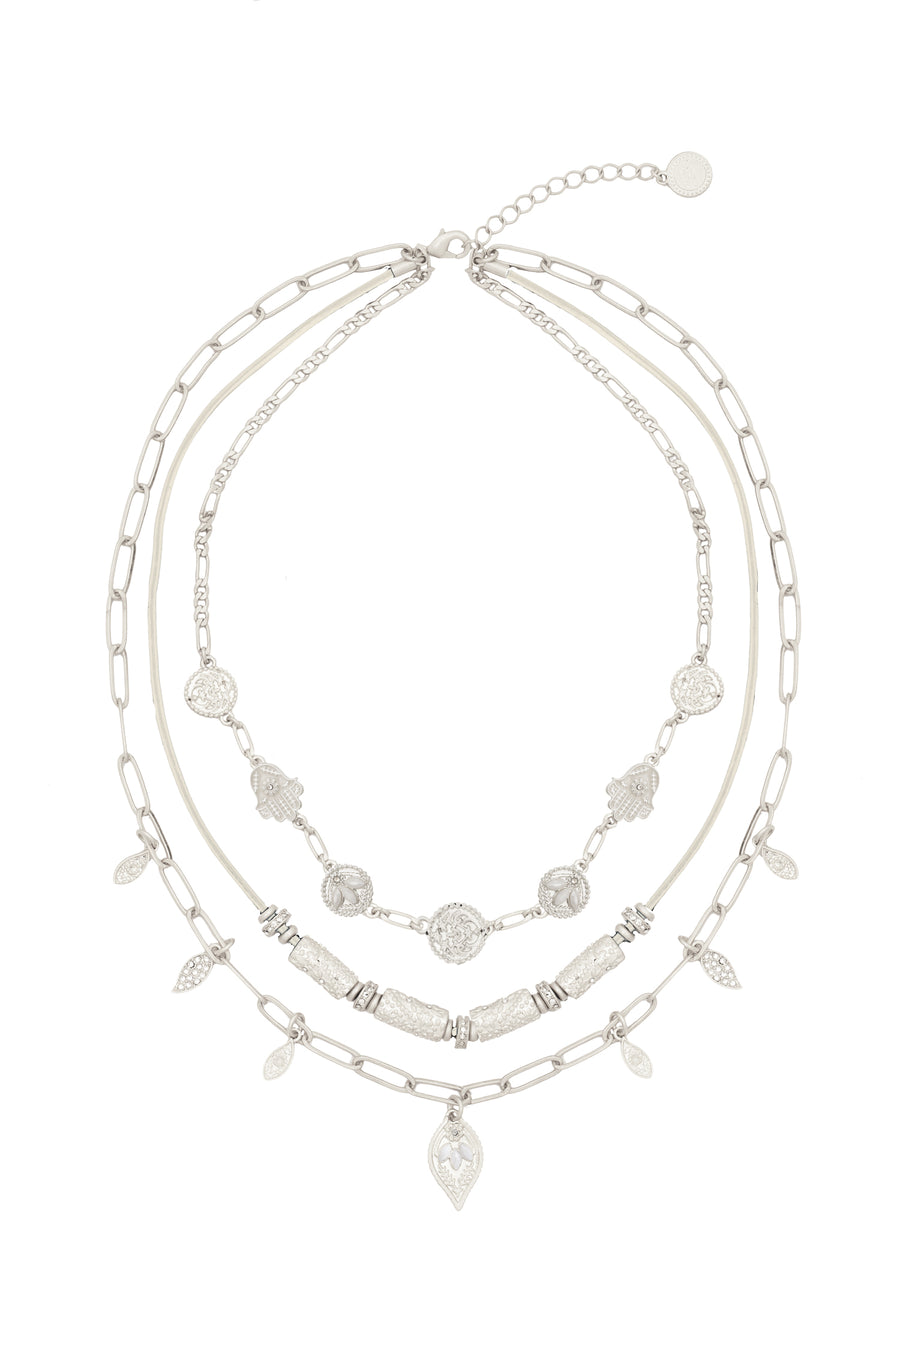 Bibi Bijoux Silver Mystic Necklace